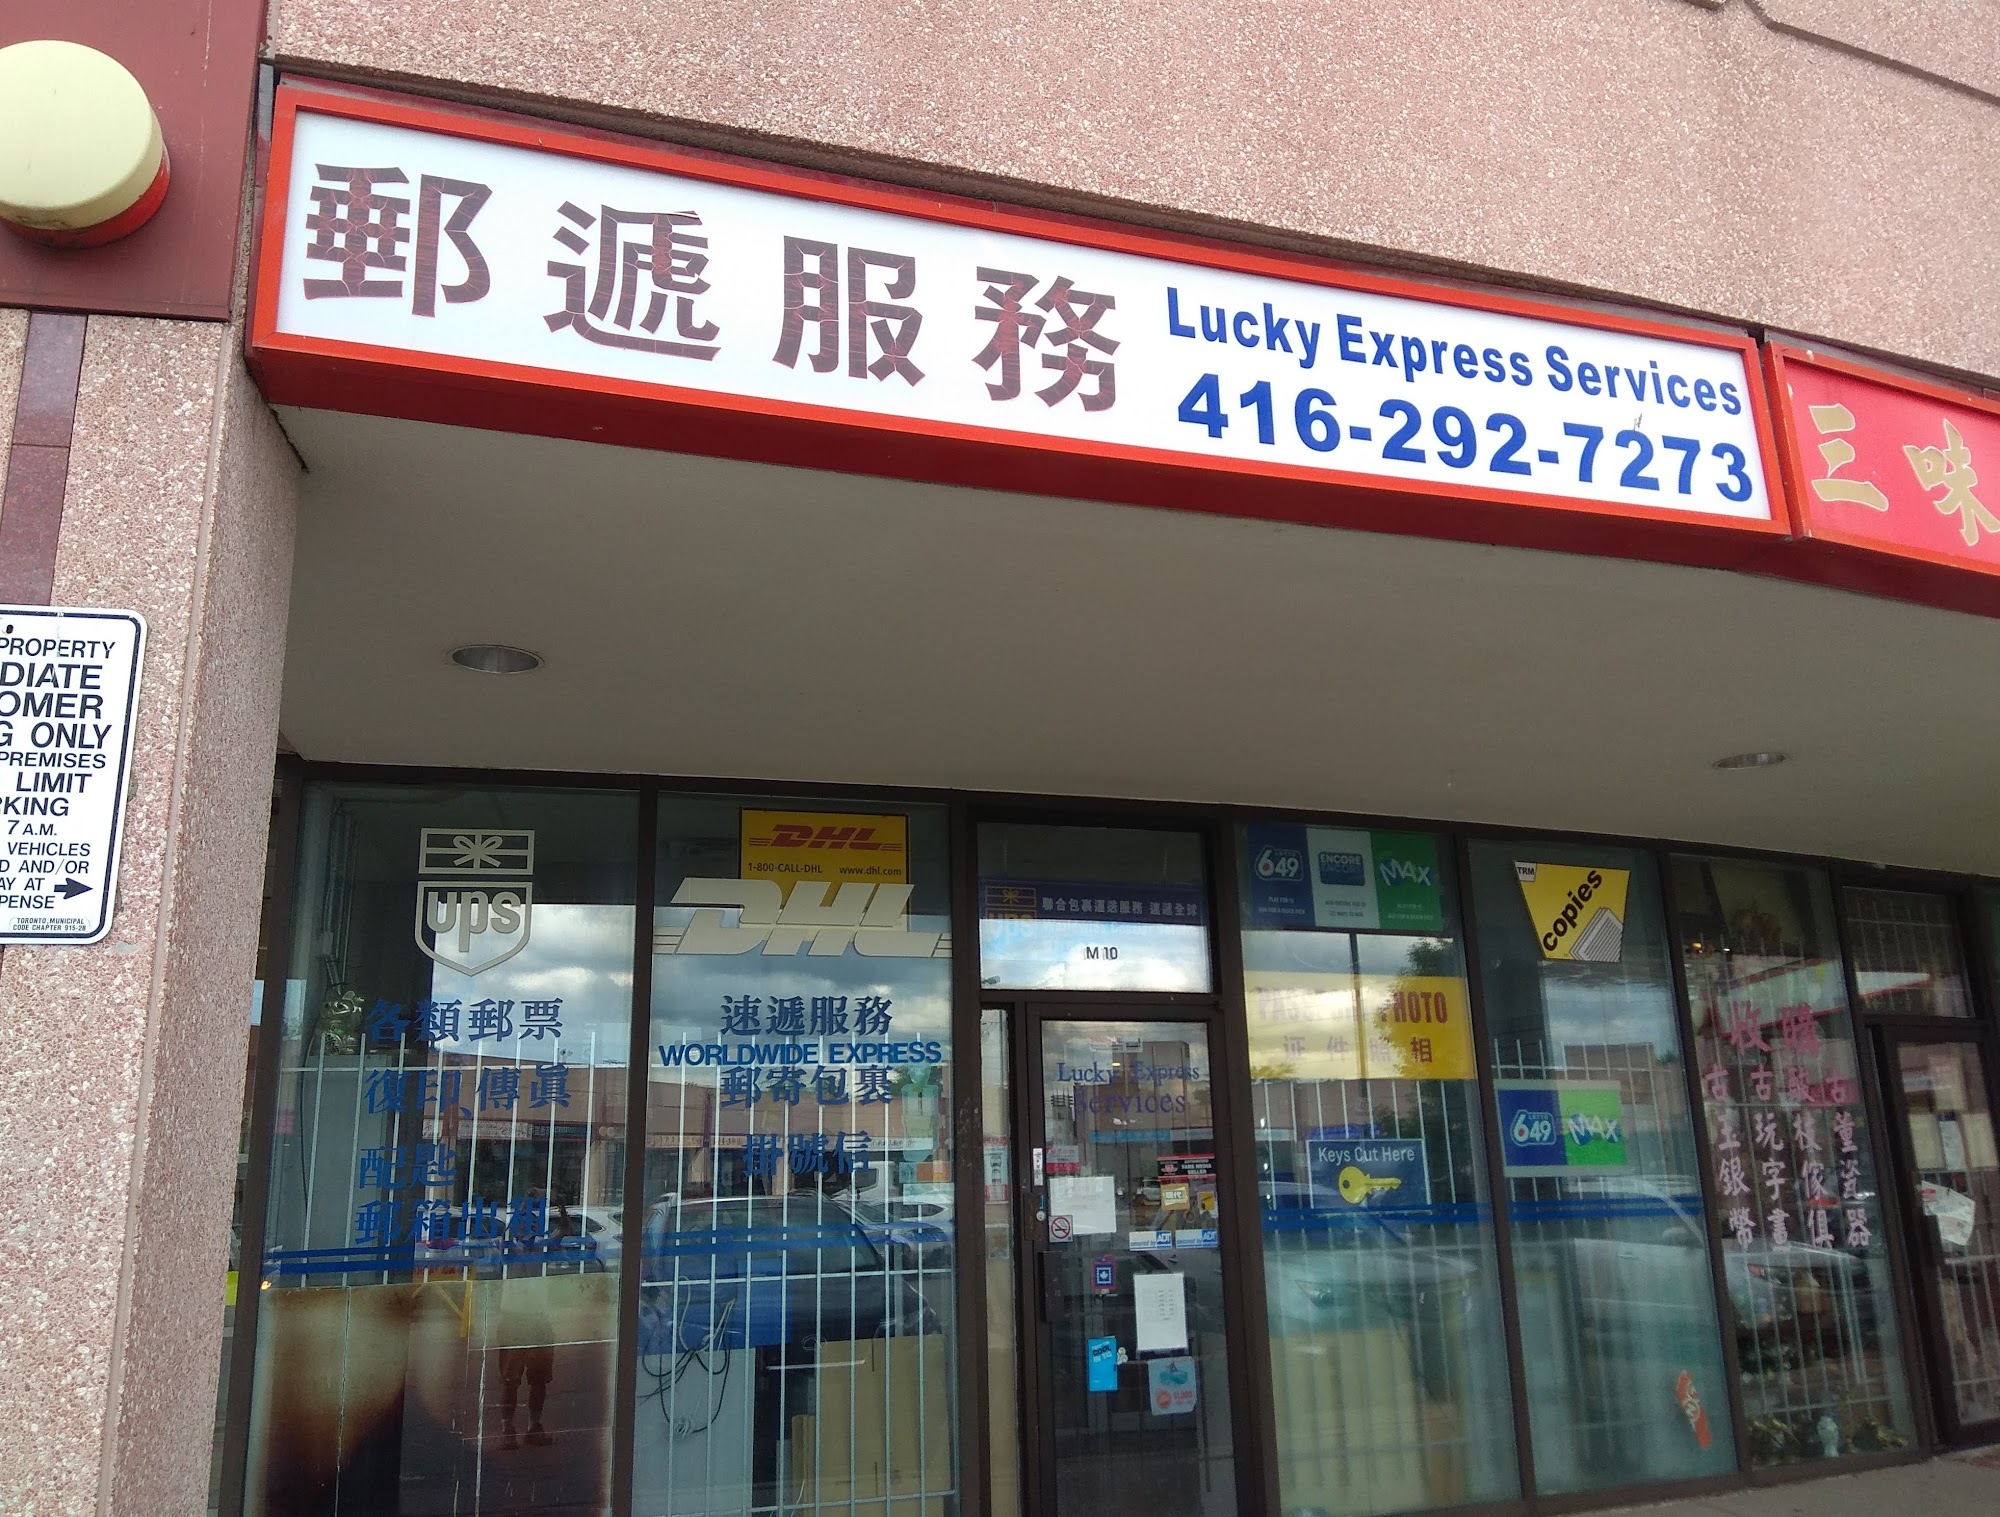 Lucky Express Services